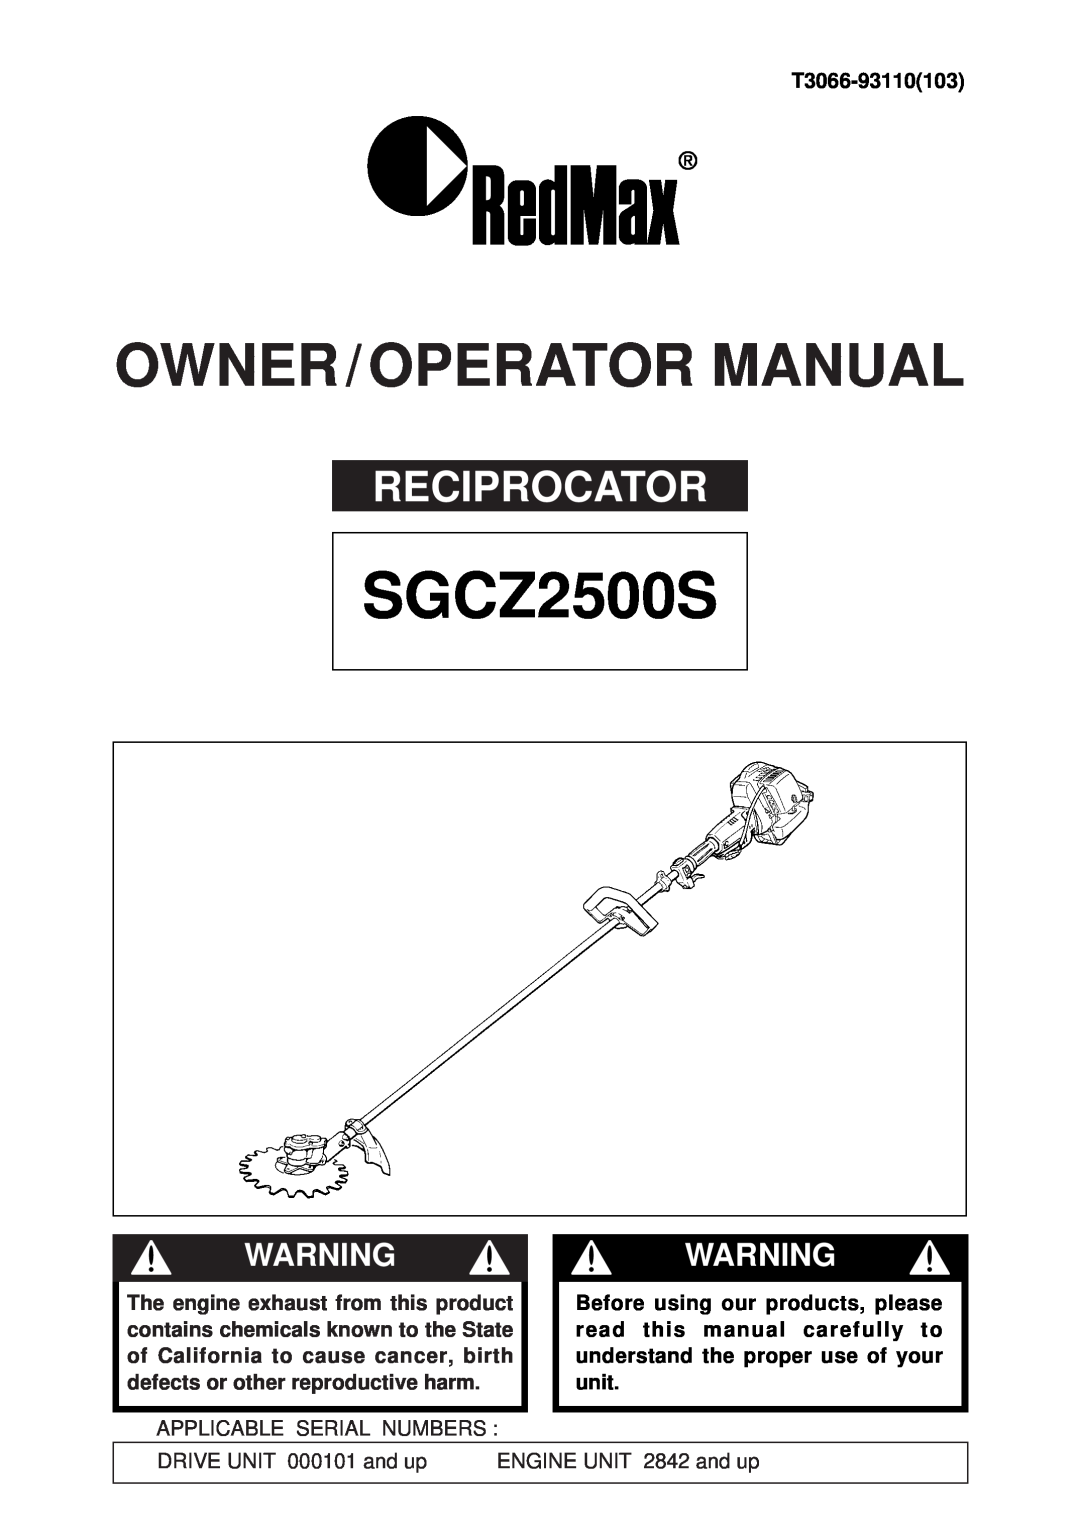 RedMax SGCZ2500S manual Reciprocator, T3066-93110103, Owner / Operator Manual, Warning Warning 